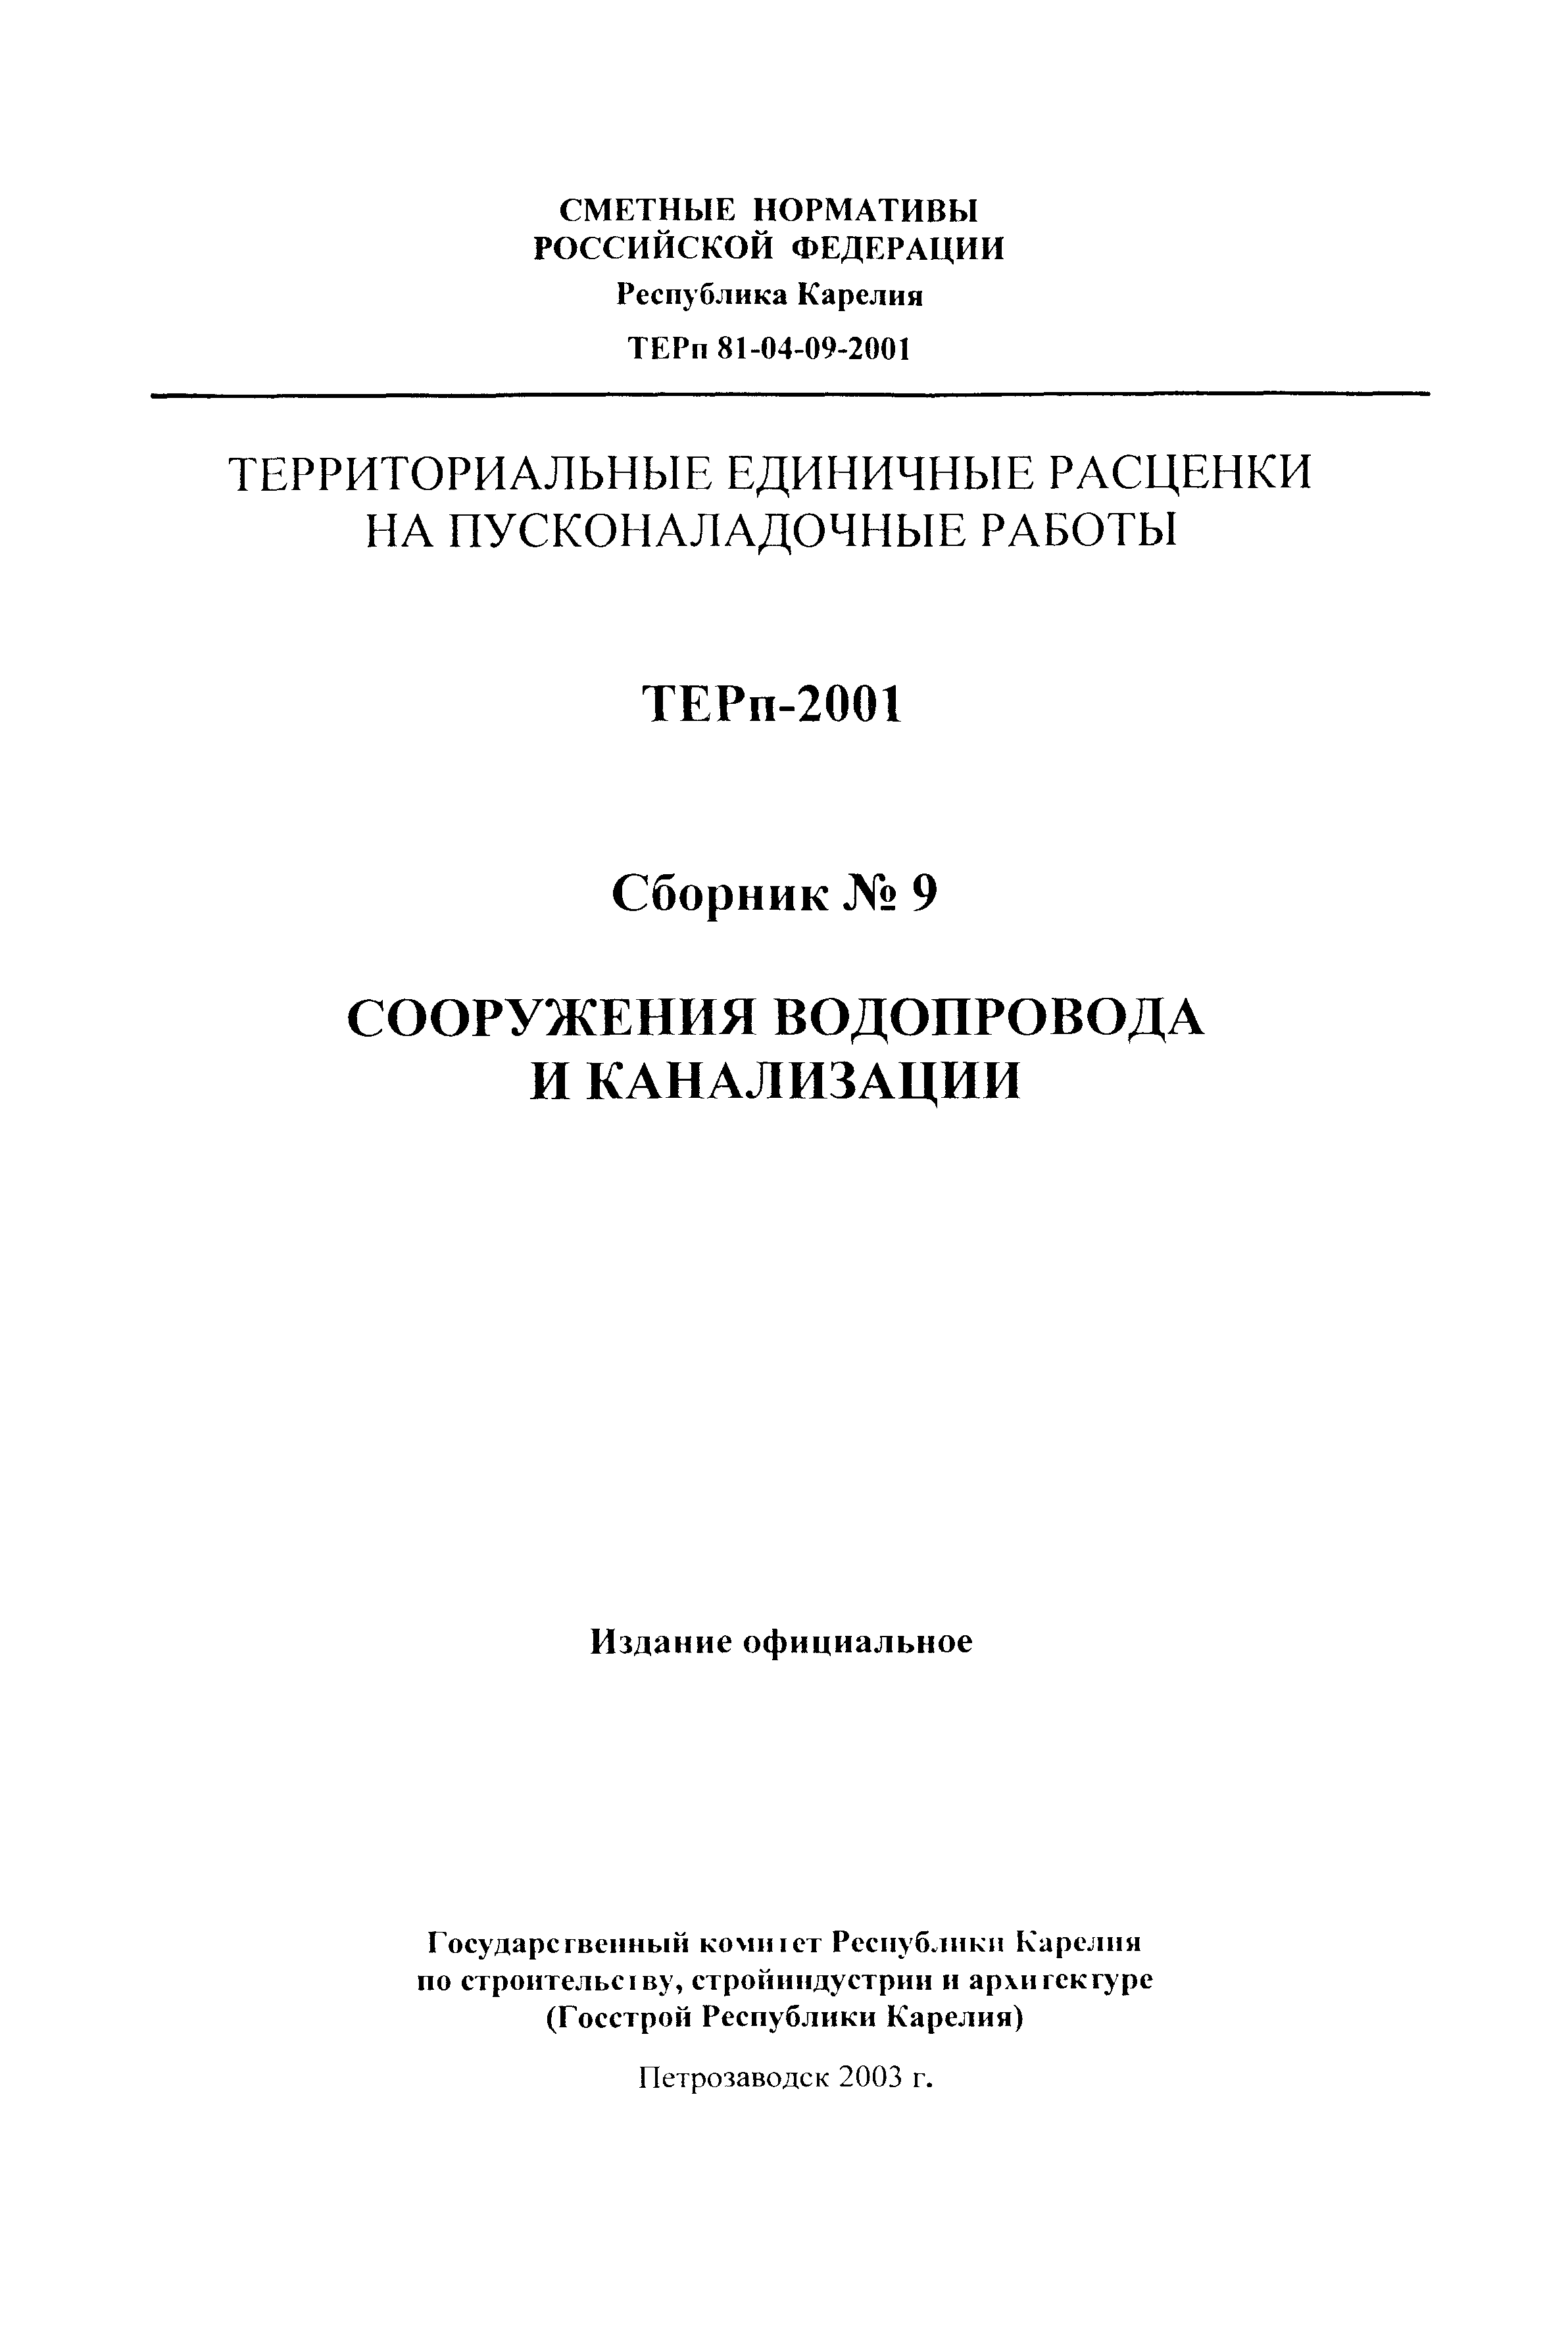 ТЕРп Республика Карелия 2001-09